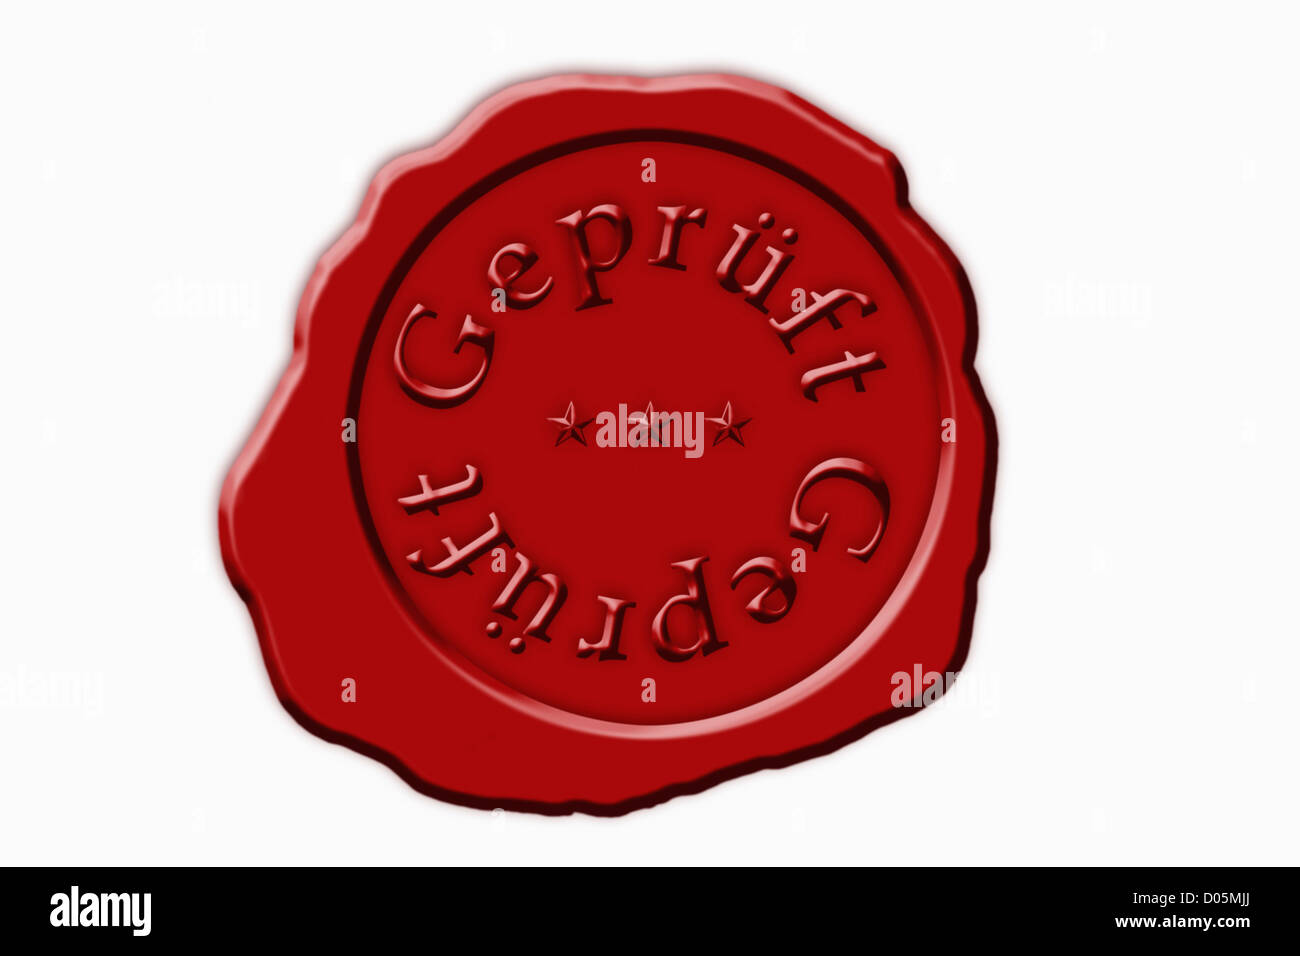 Detailansicht eines roten Siegels mit der Aufschrift Geprüft | Dettaglio foto di un sigillo rosso con il tedesco certificato di iscrizione Foto Stock